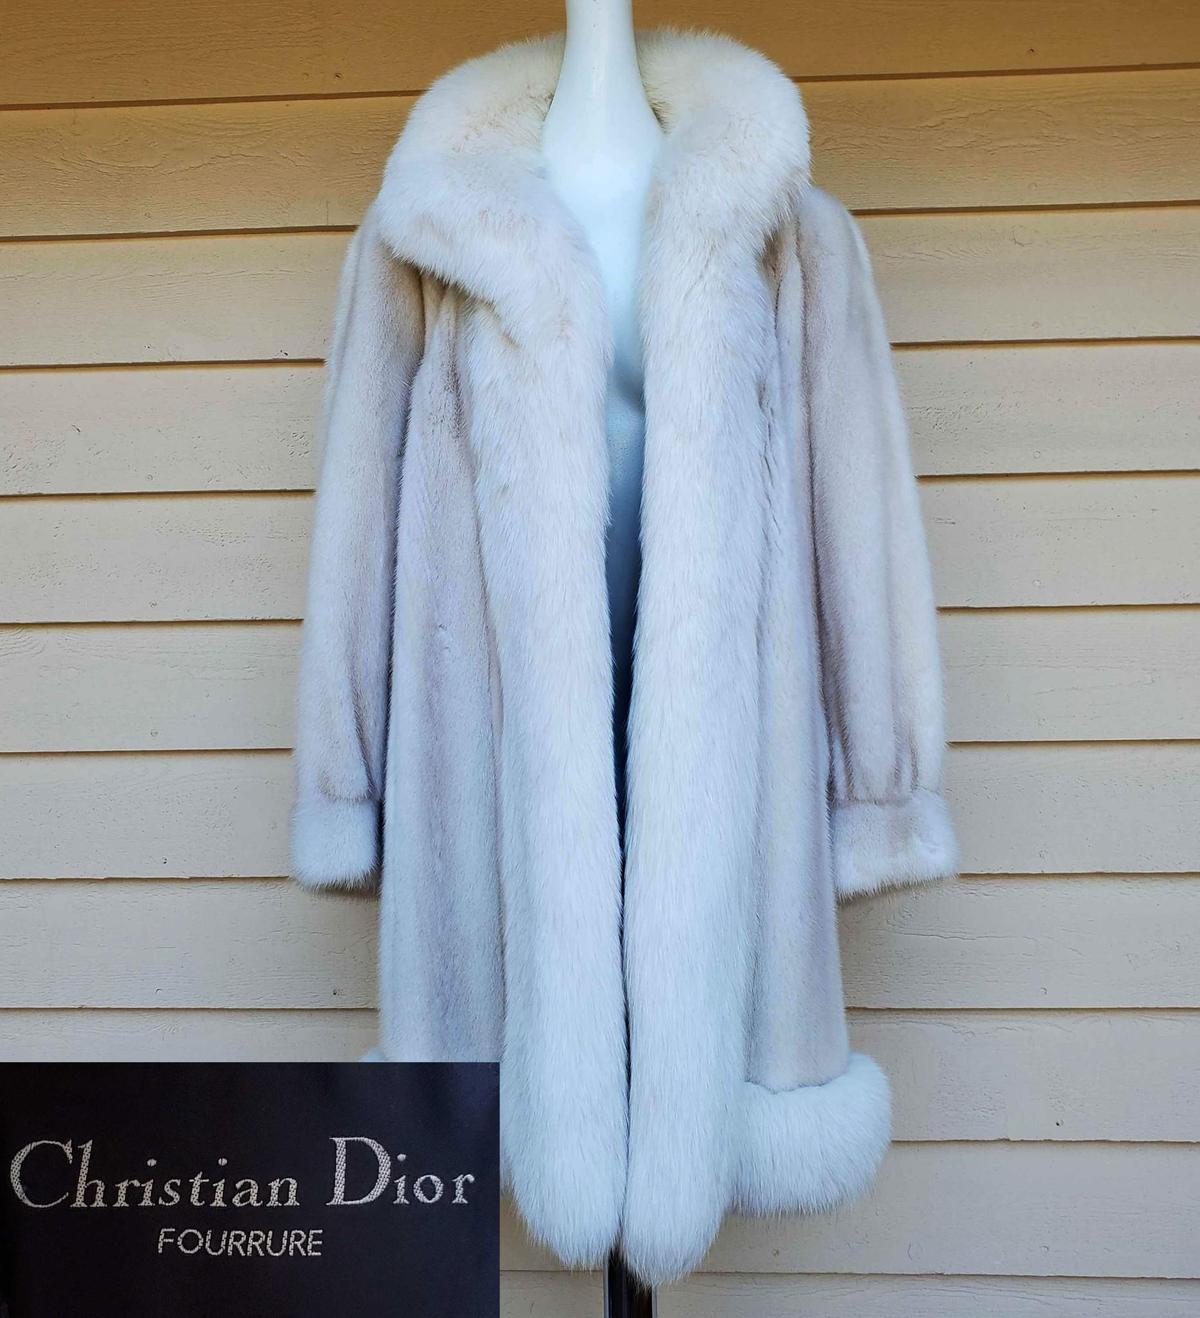 Amazing Genuine Christian Dior Fourrure Mink & Fox Fur Stoller Coat